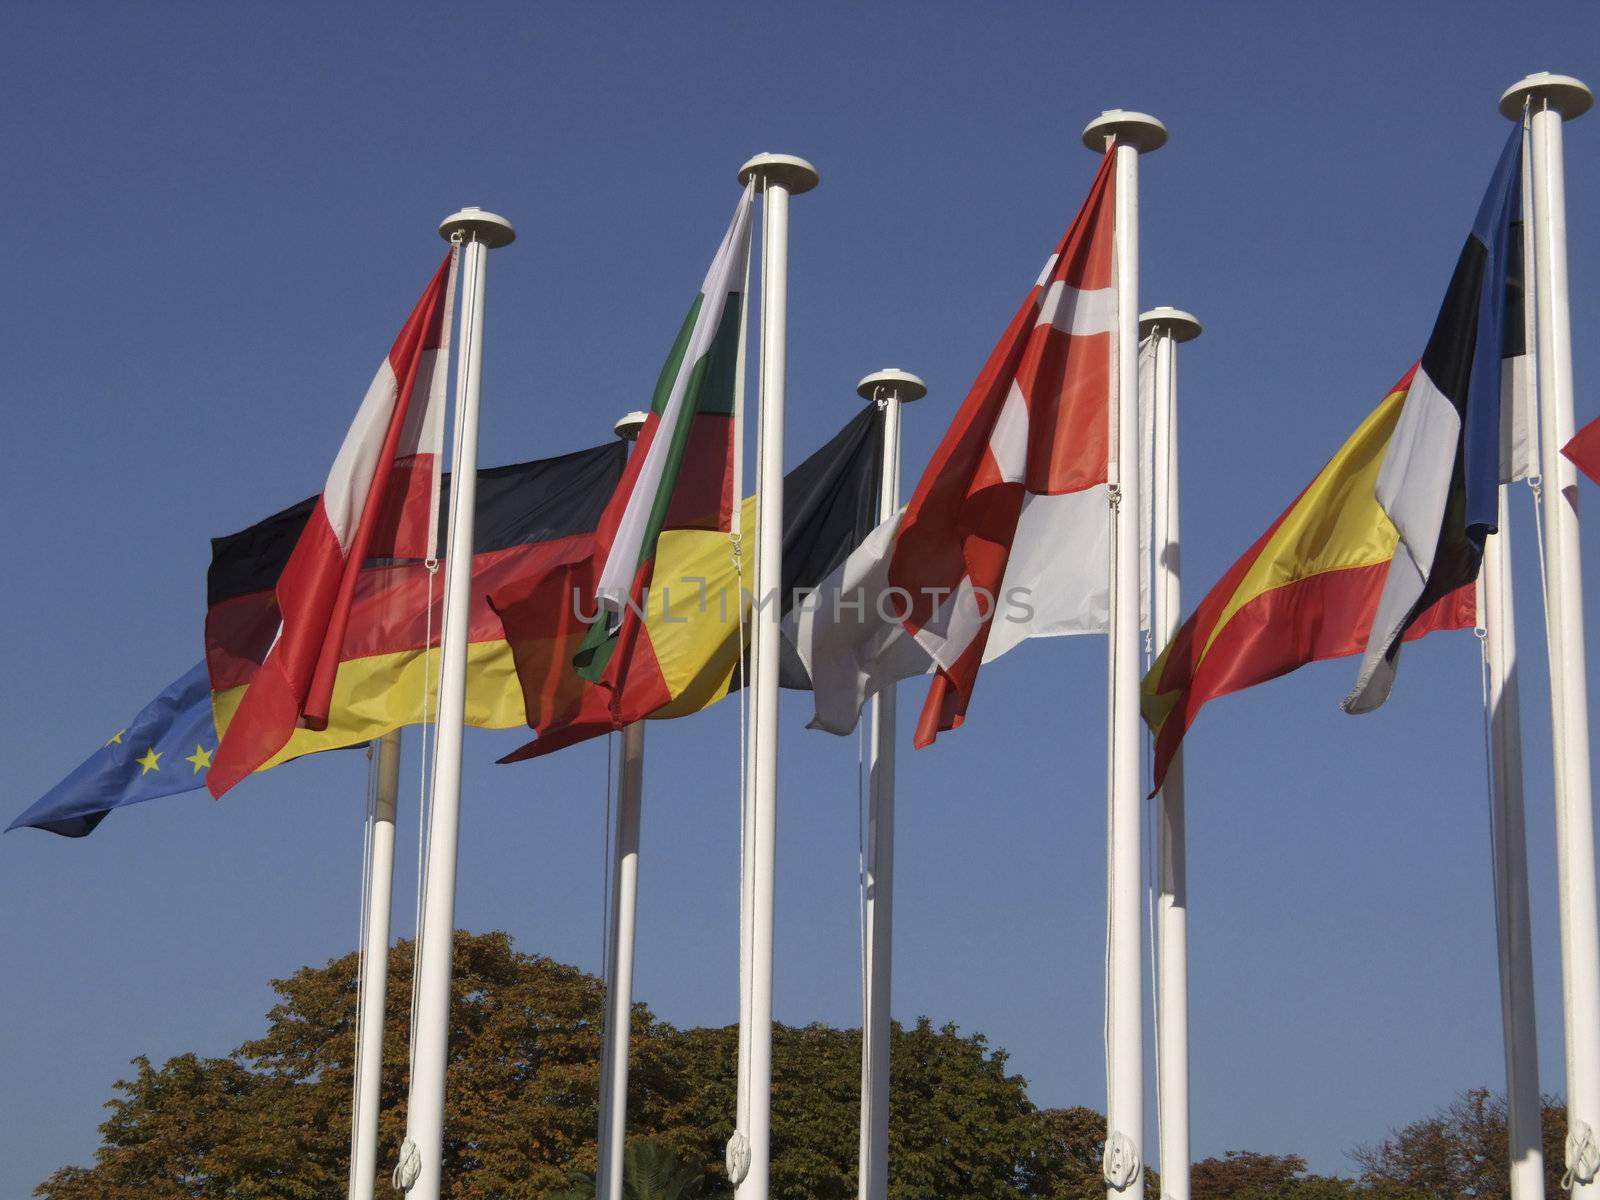 European Flags in the Luxembourg garden in Paris